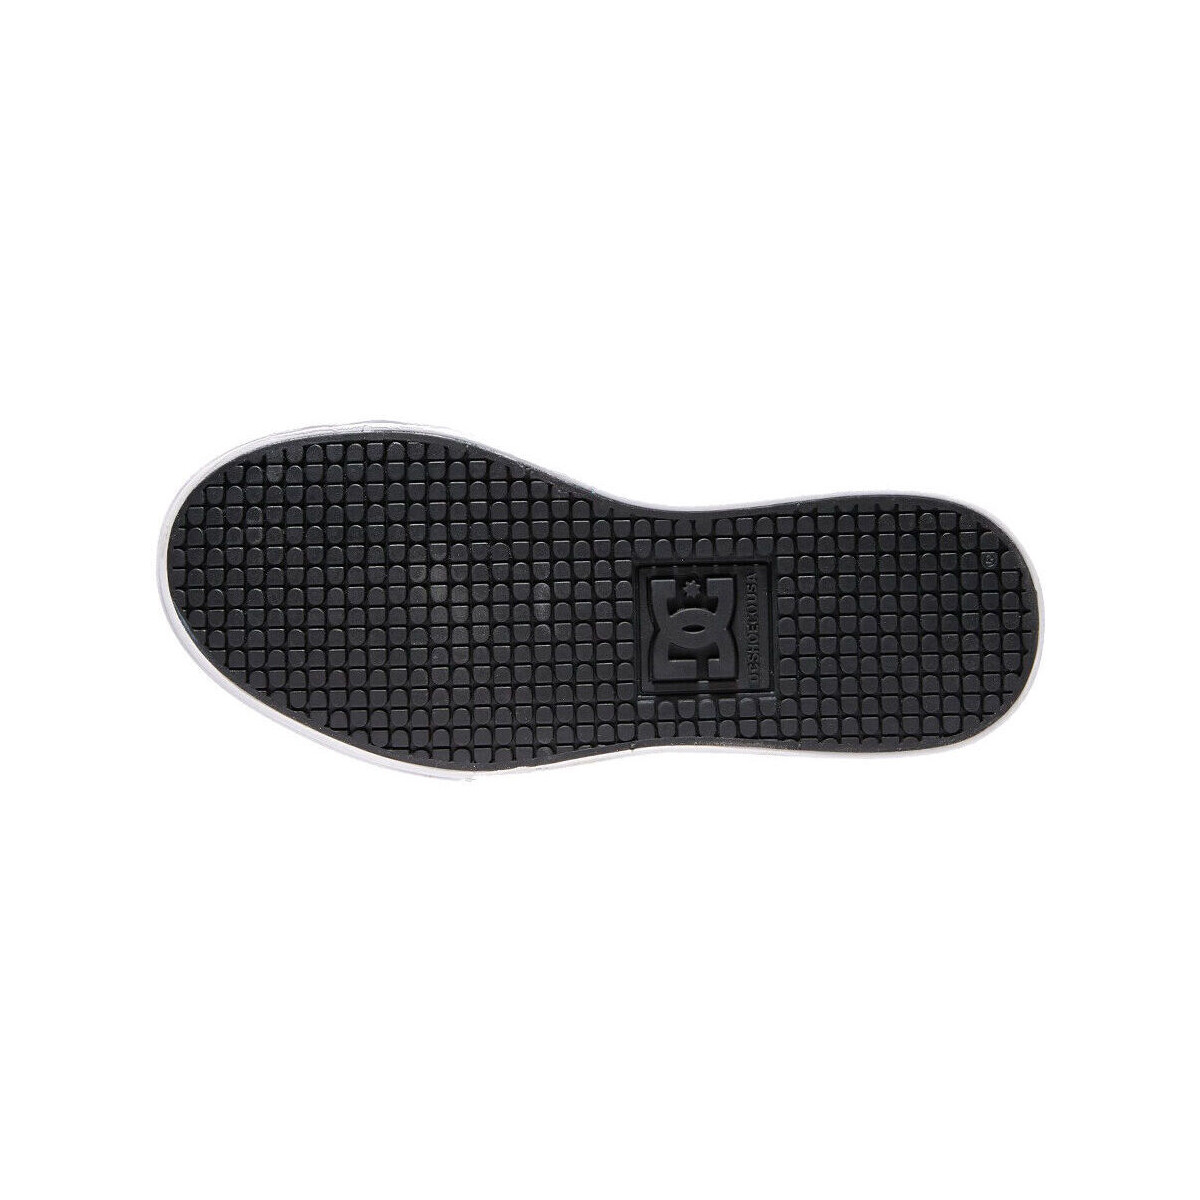 DC Shoes Noir Pure elastic se sn ADBS300301 BLACK/WHITE/BROWN (XKWC) vth2qLGZ